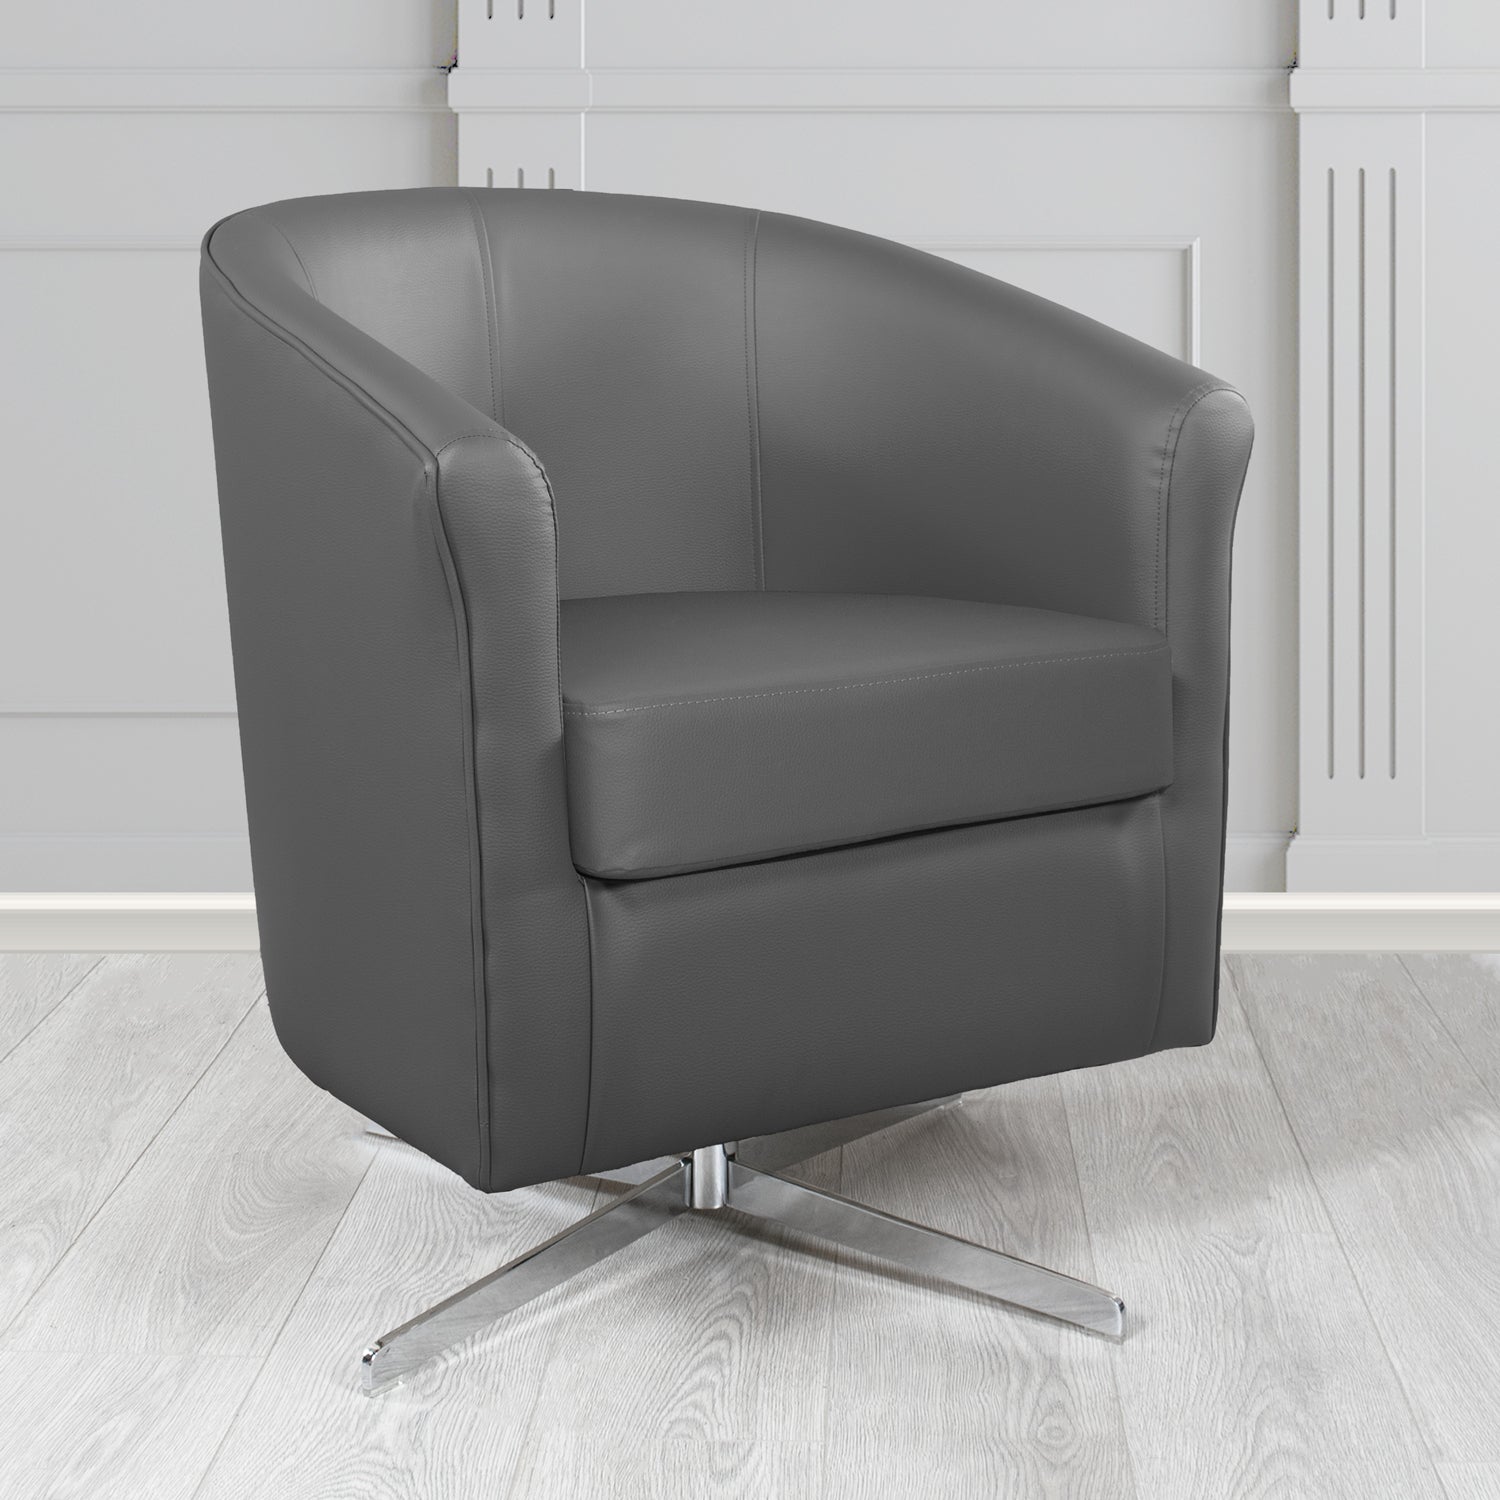 Cannes Swivel Tub Chair in Just Colour Gunmetal Grey Crib 5 Faux Leather - The Tub Chair Shop